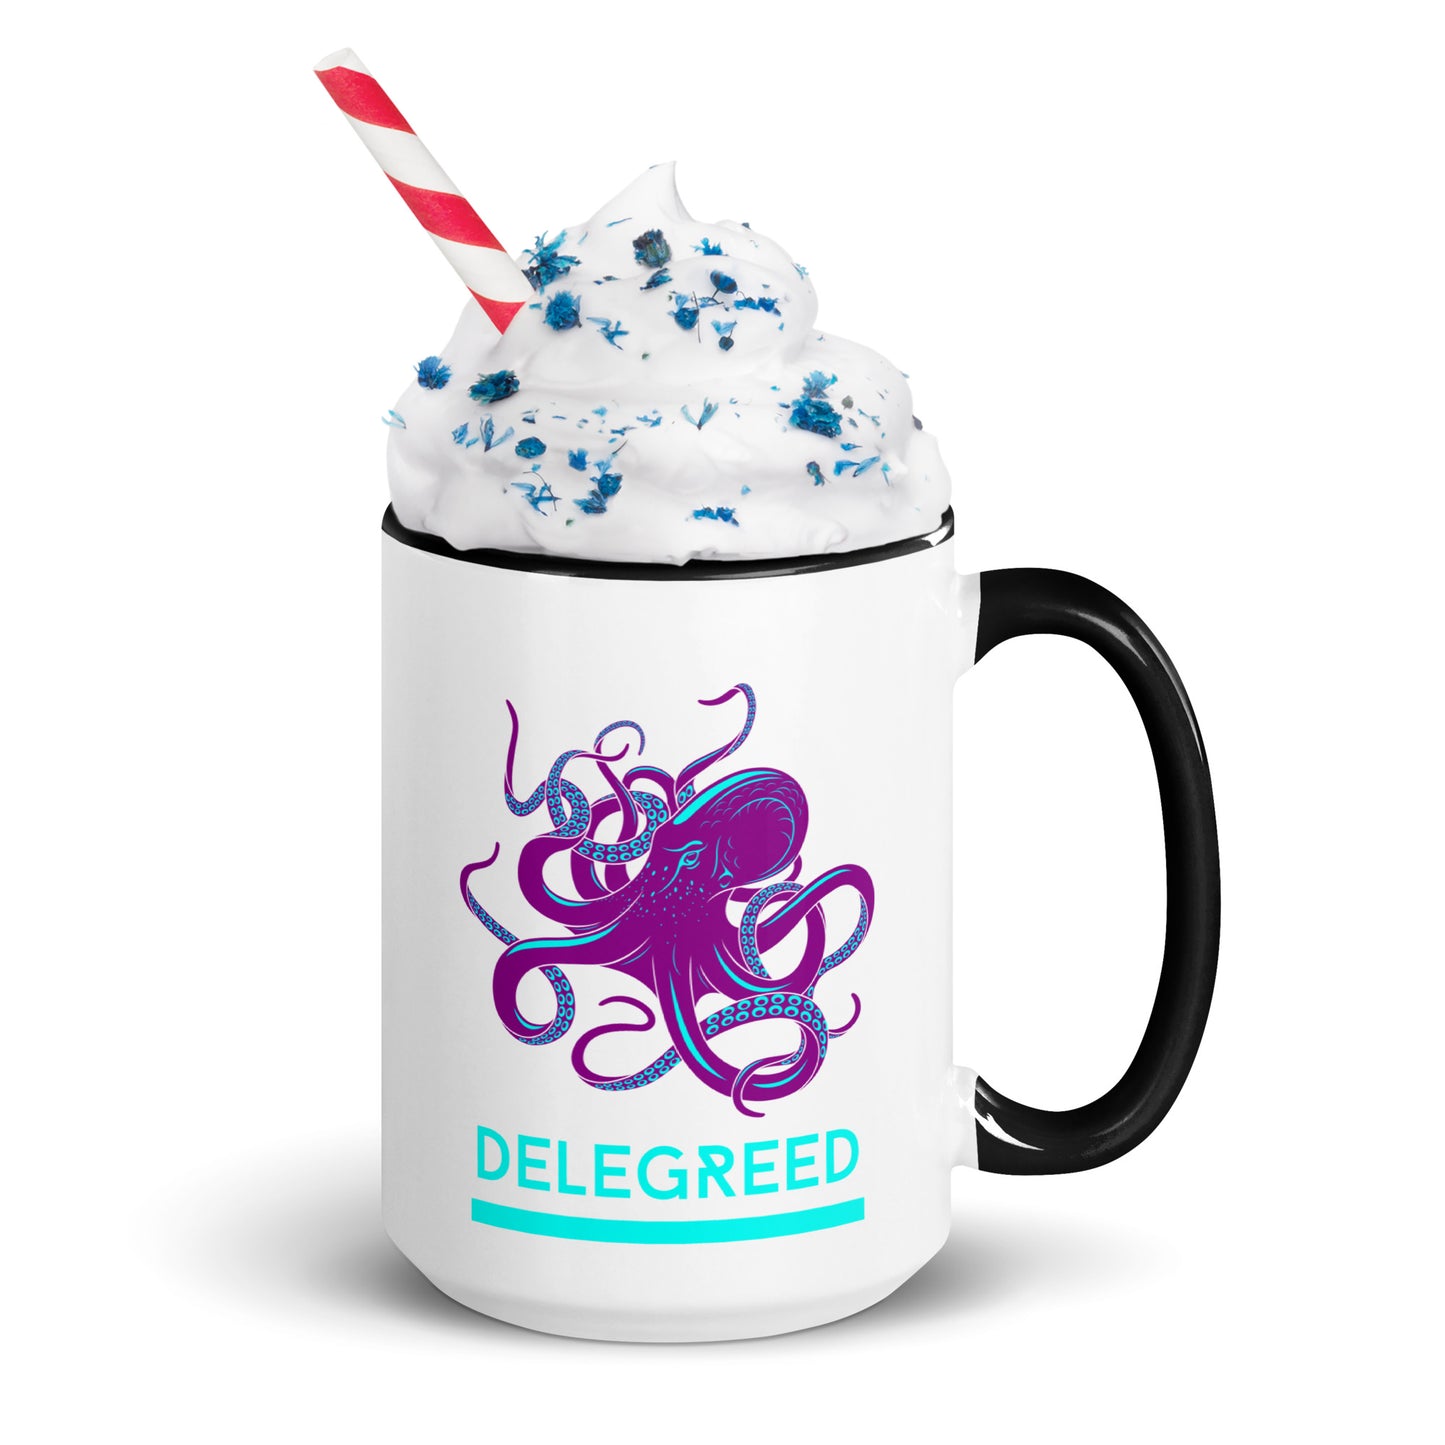 De Le Greed Octopus Mug With Color Inside